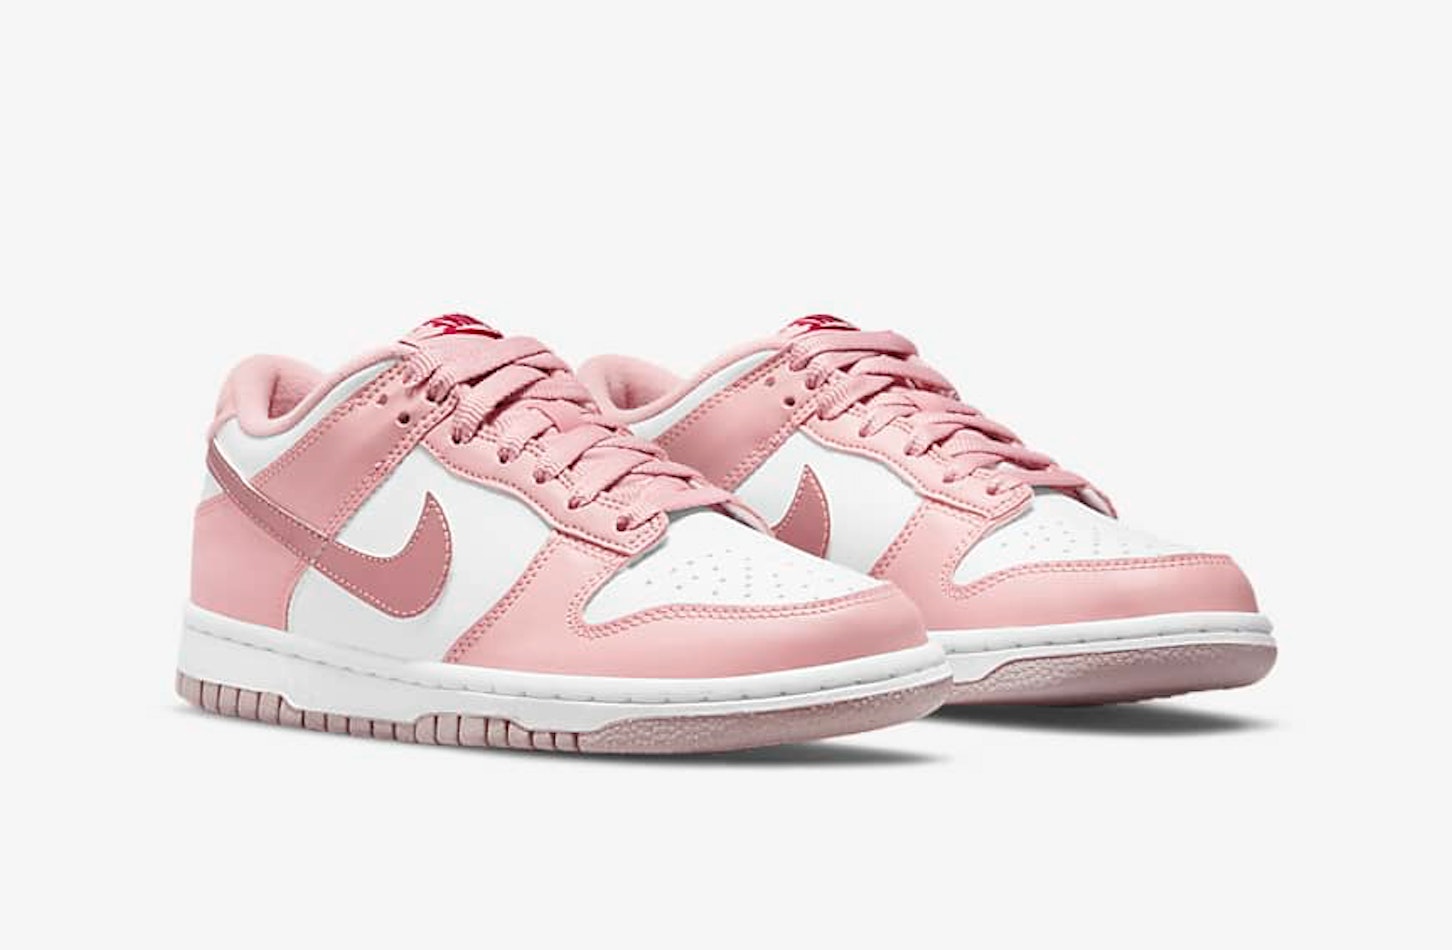 Nike Dunk Low GS "Pink Glaze"